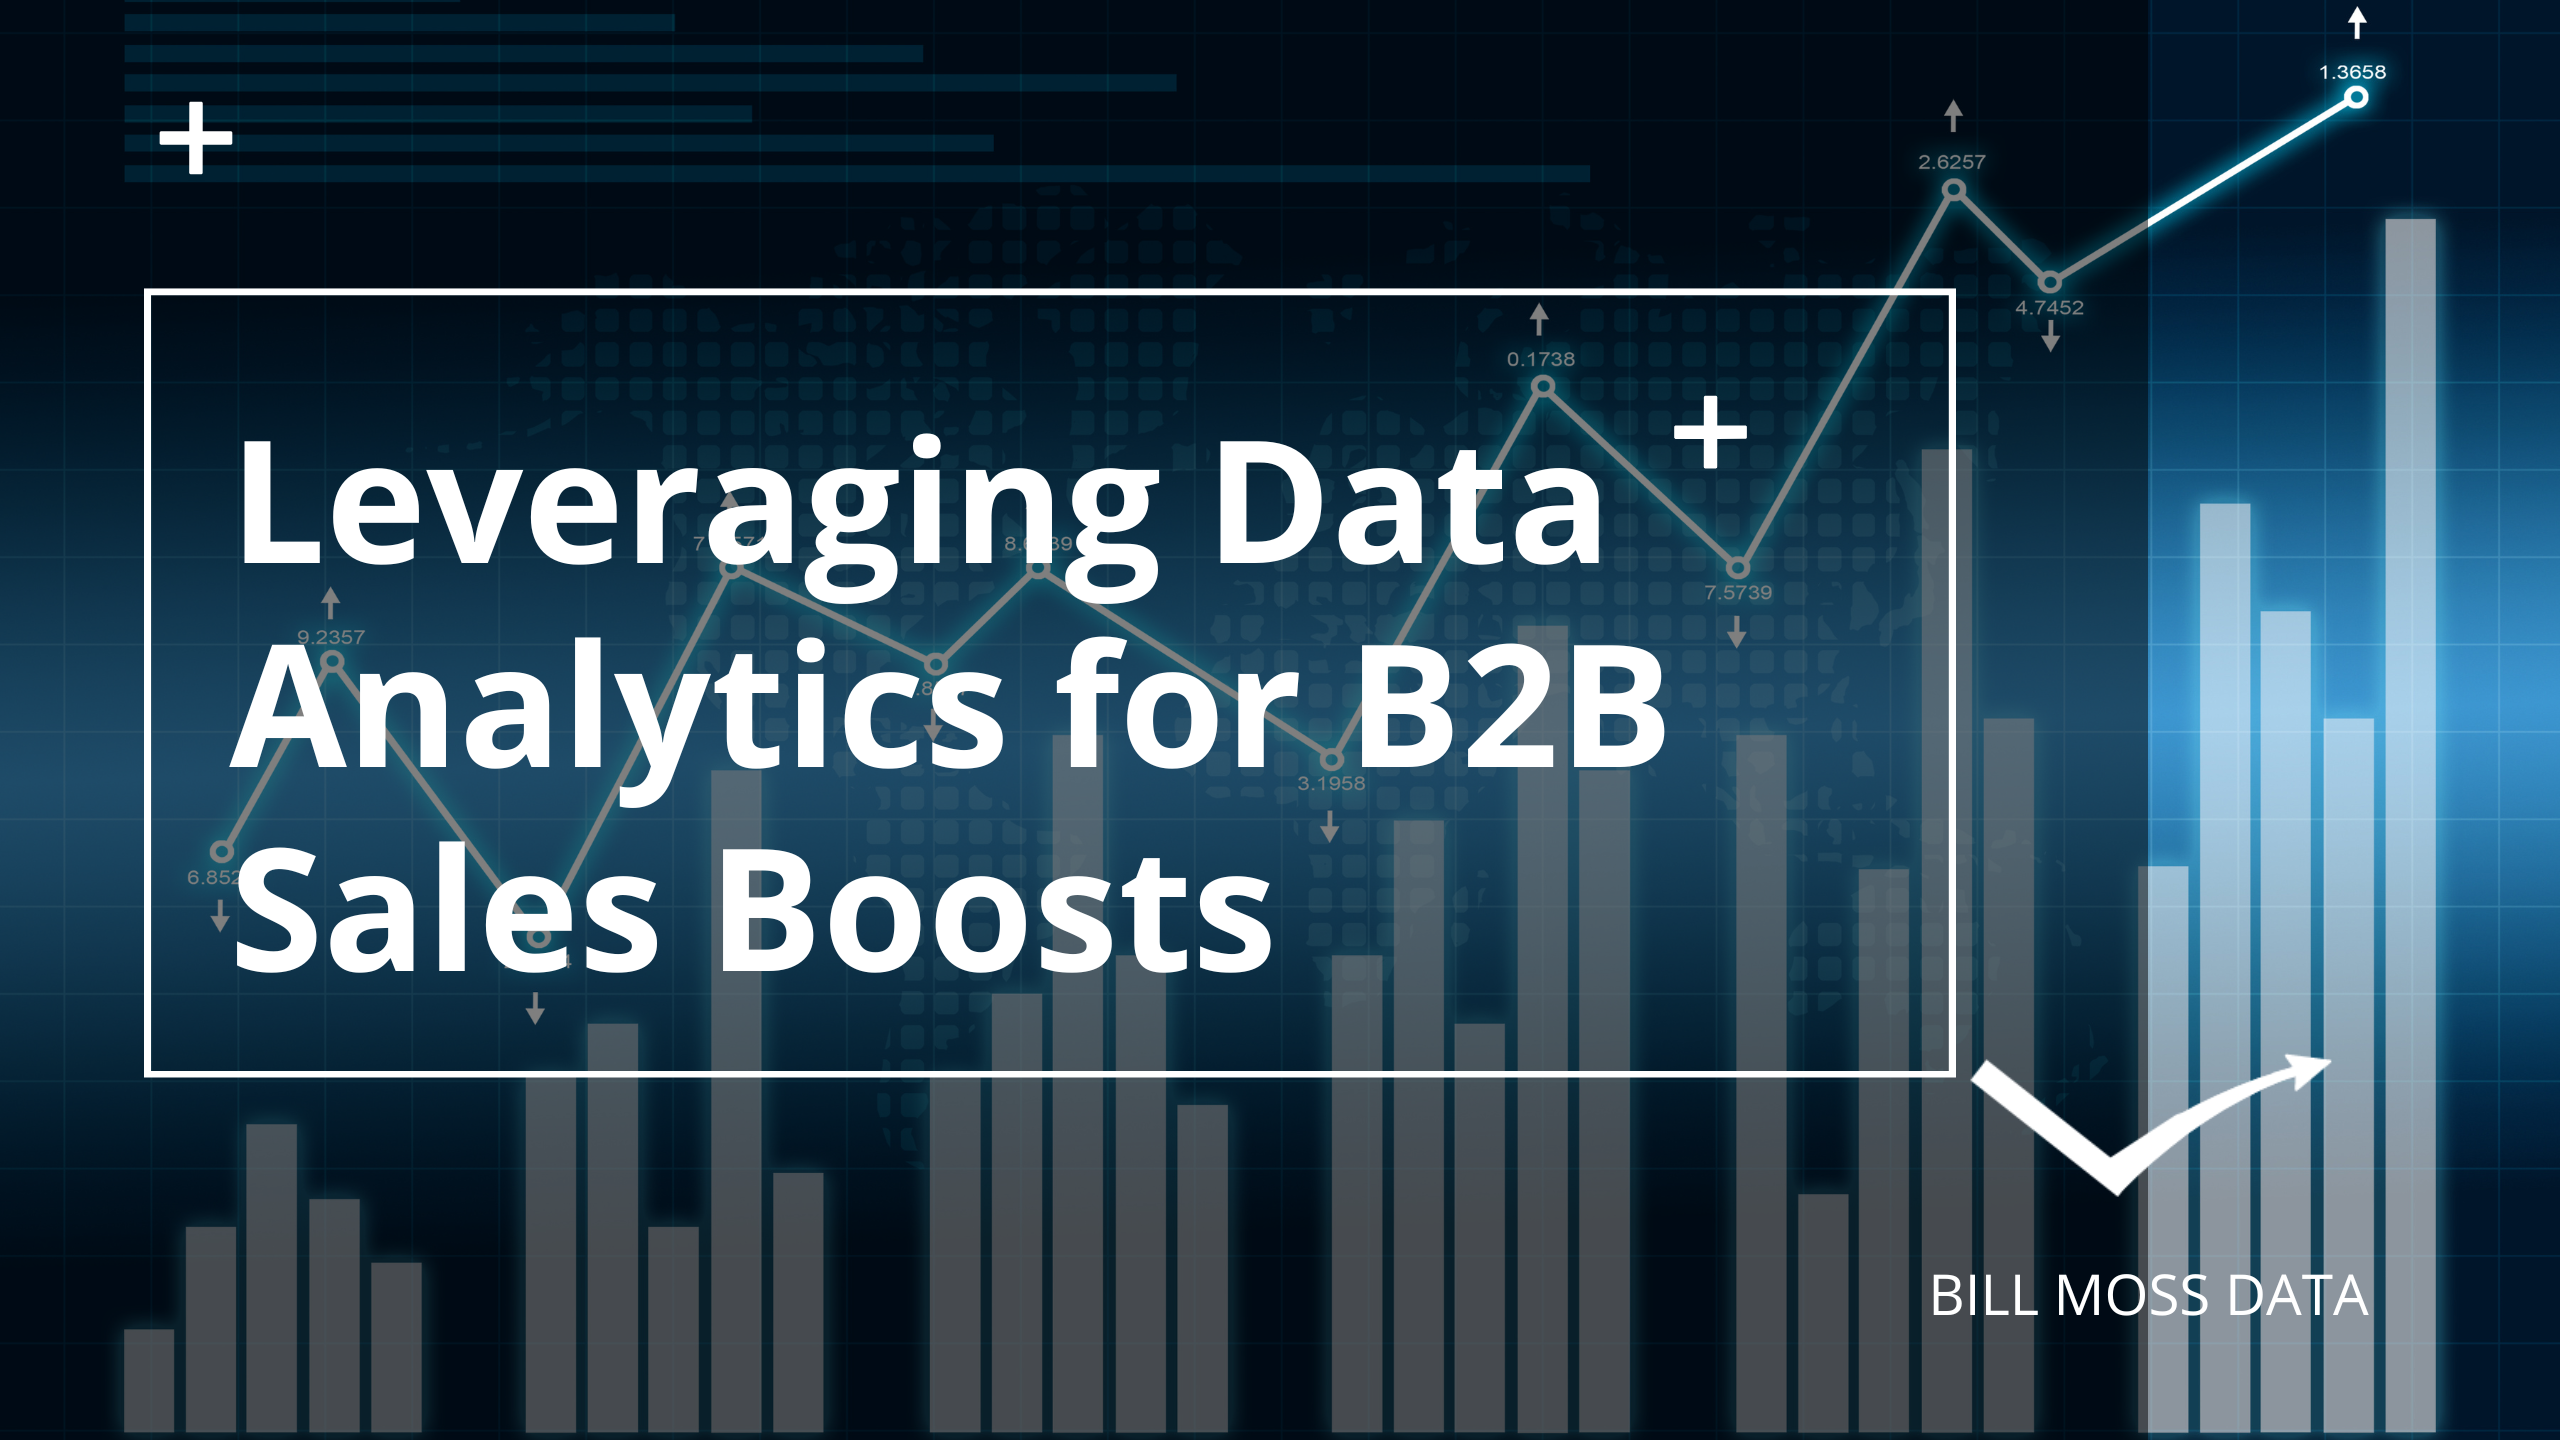 Leveraging data analytics for B2B marketing